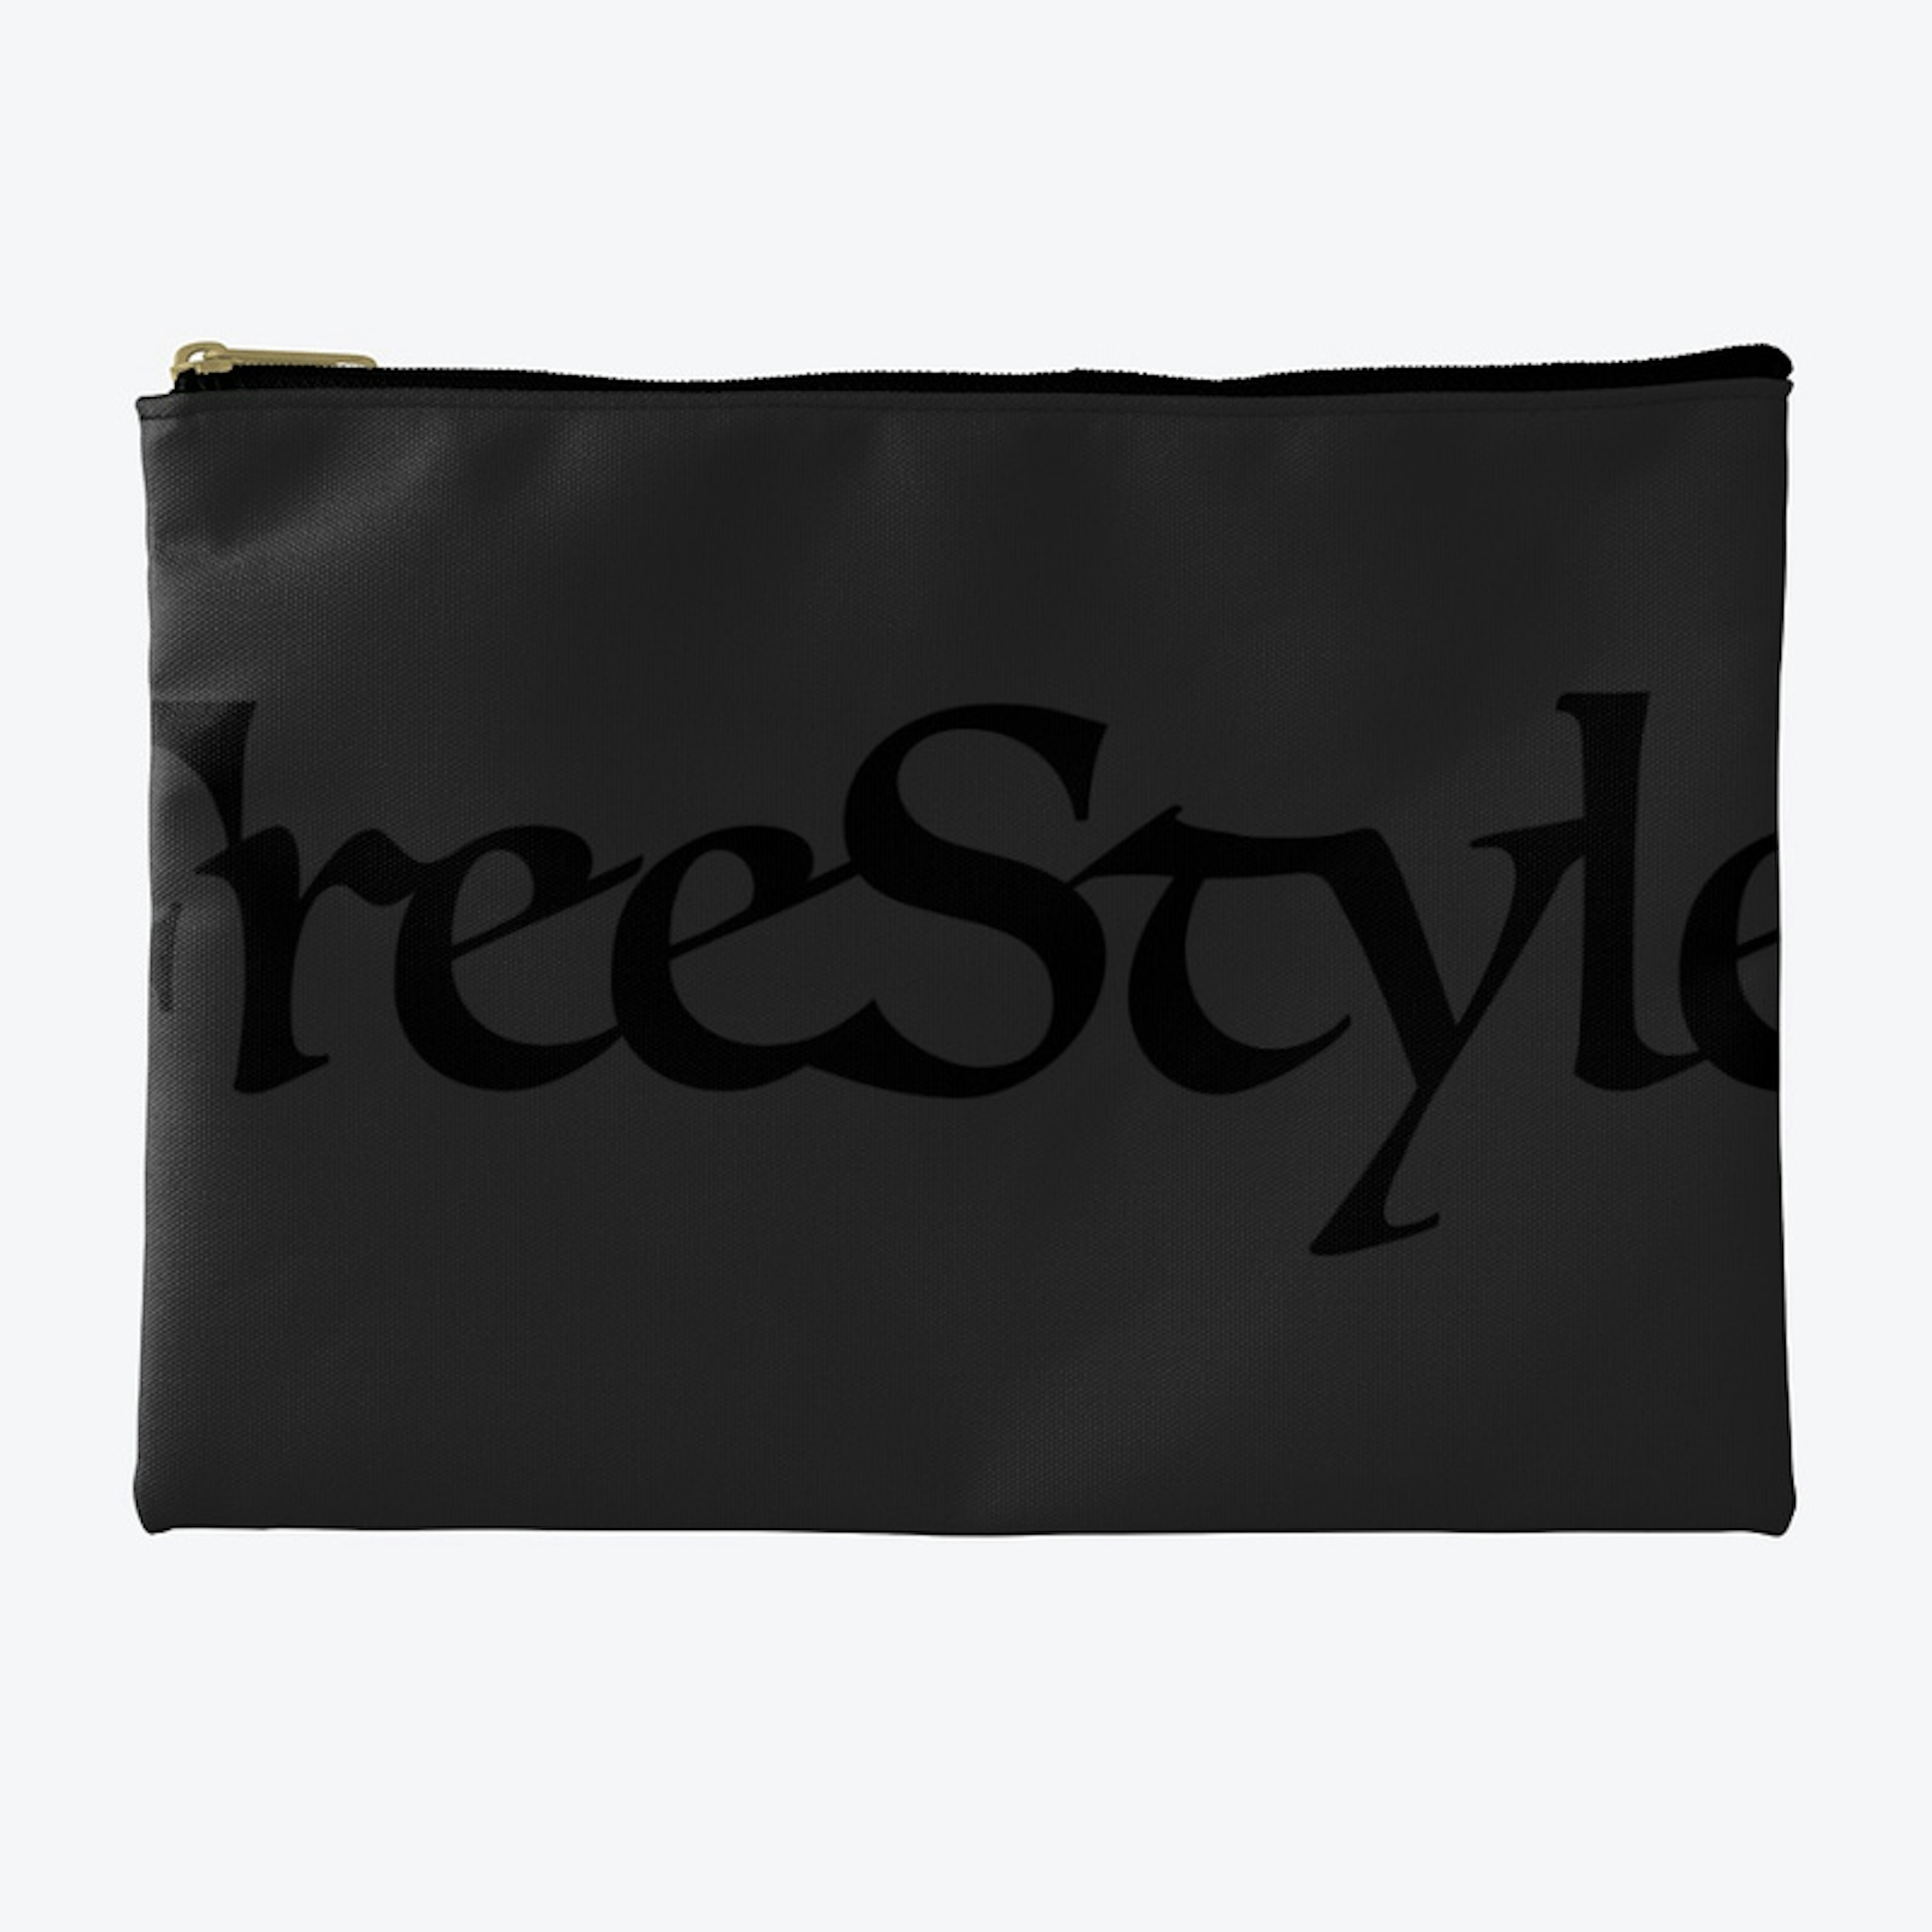 FreeStyle™